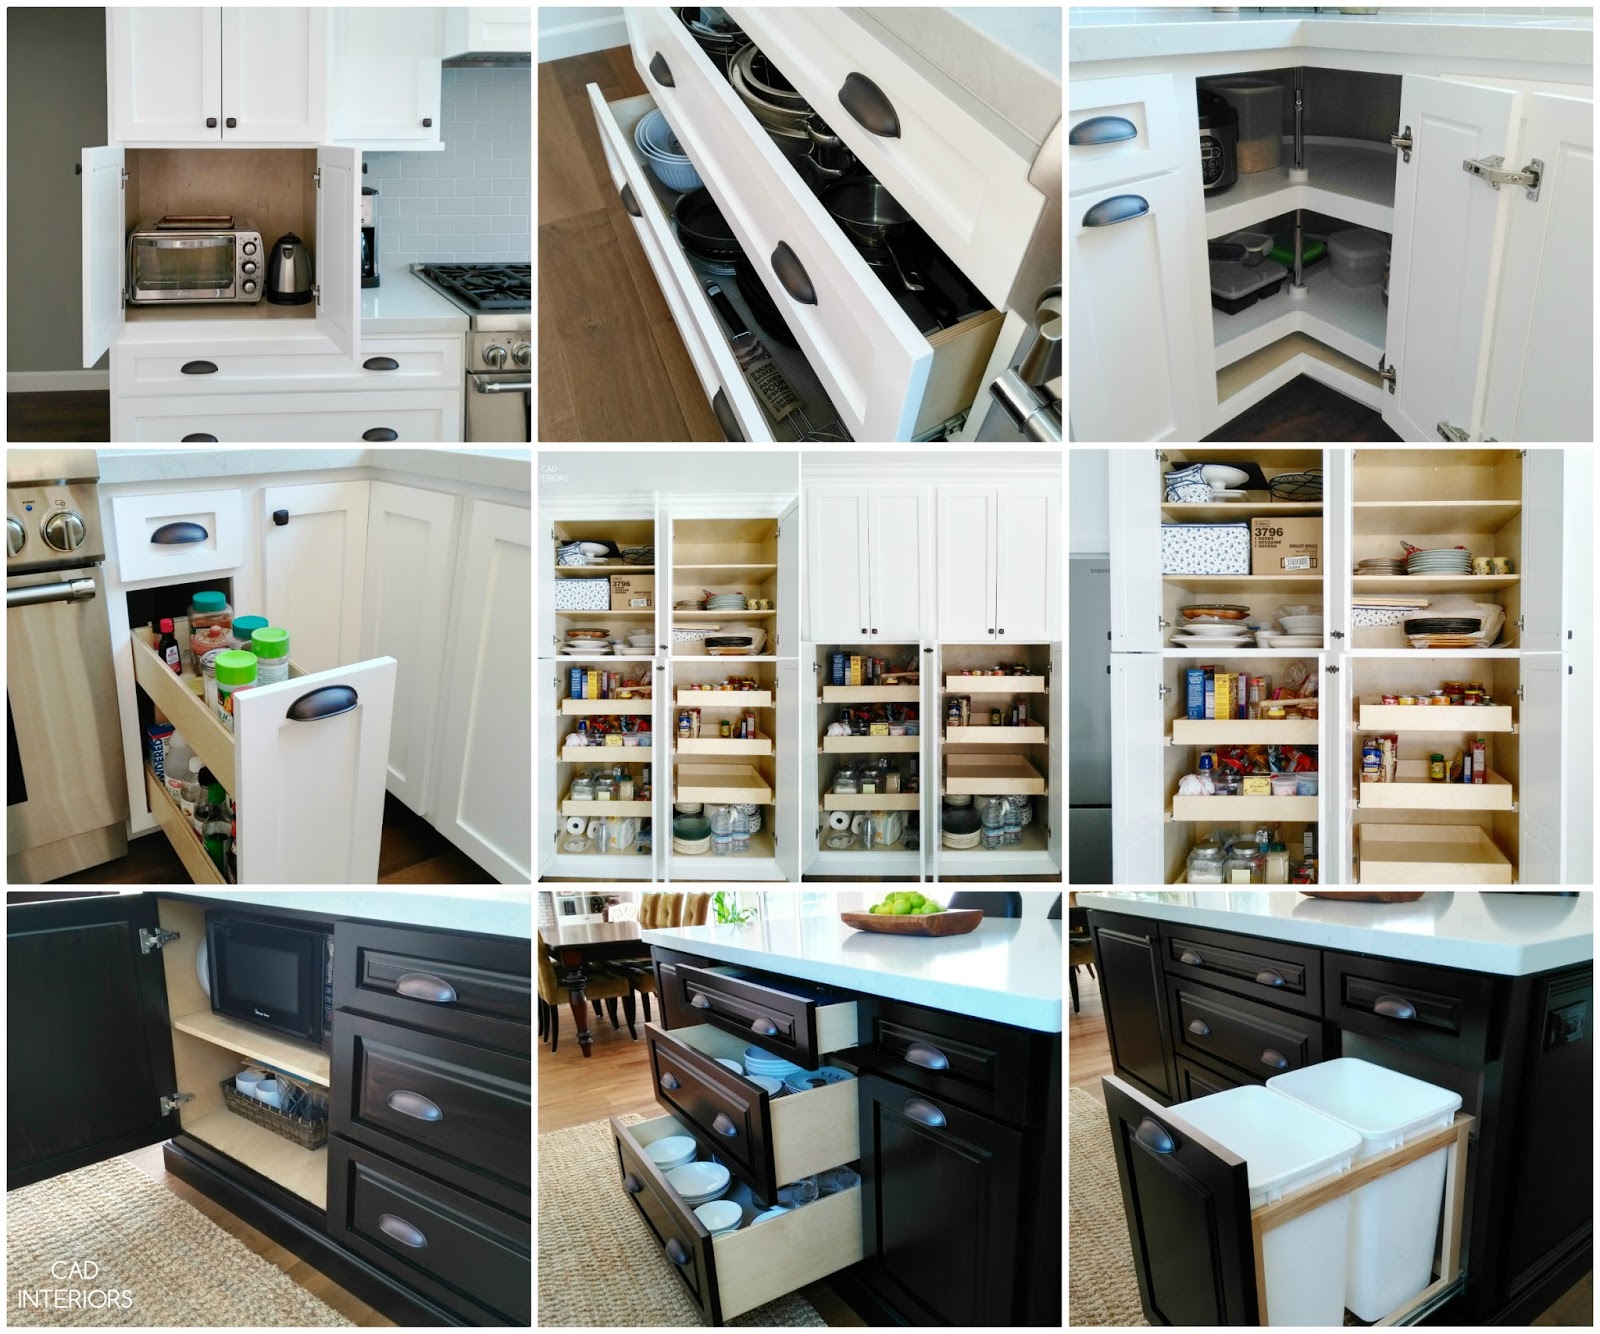 CAD Interiors kitchen renovation home improvement interior design